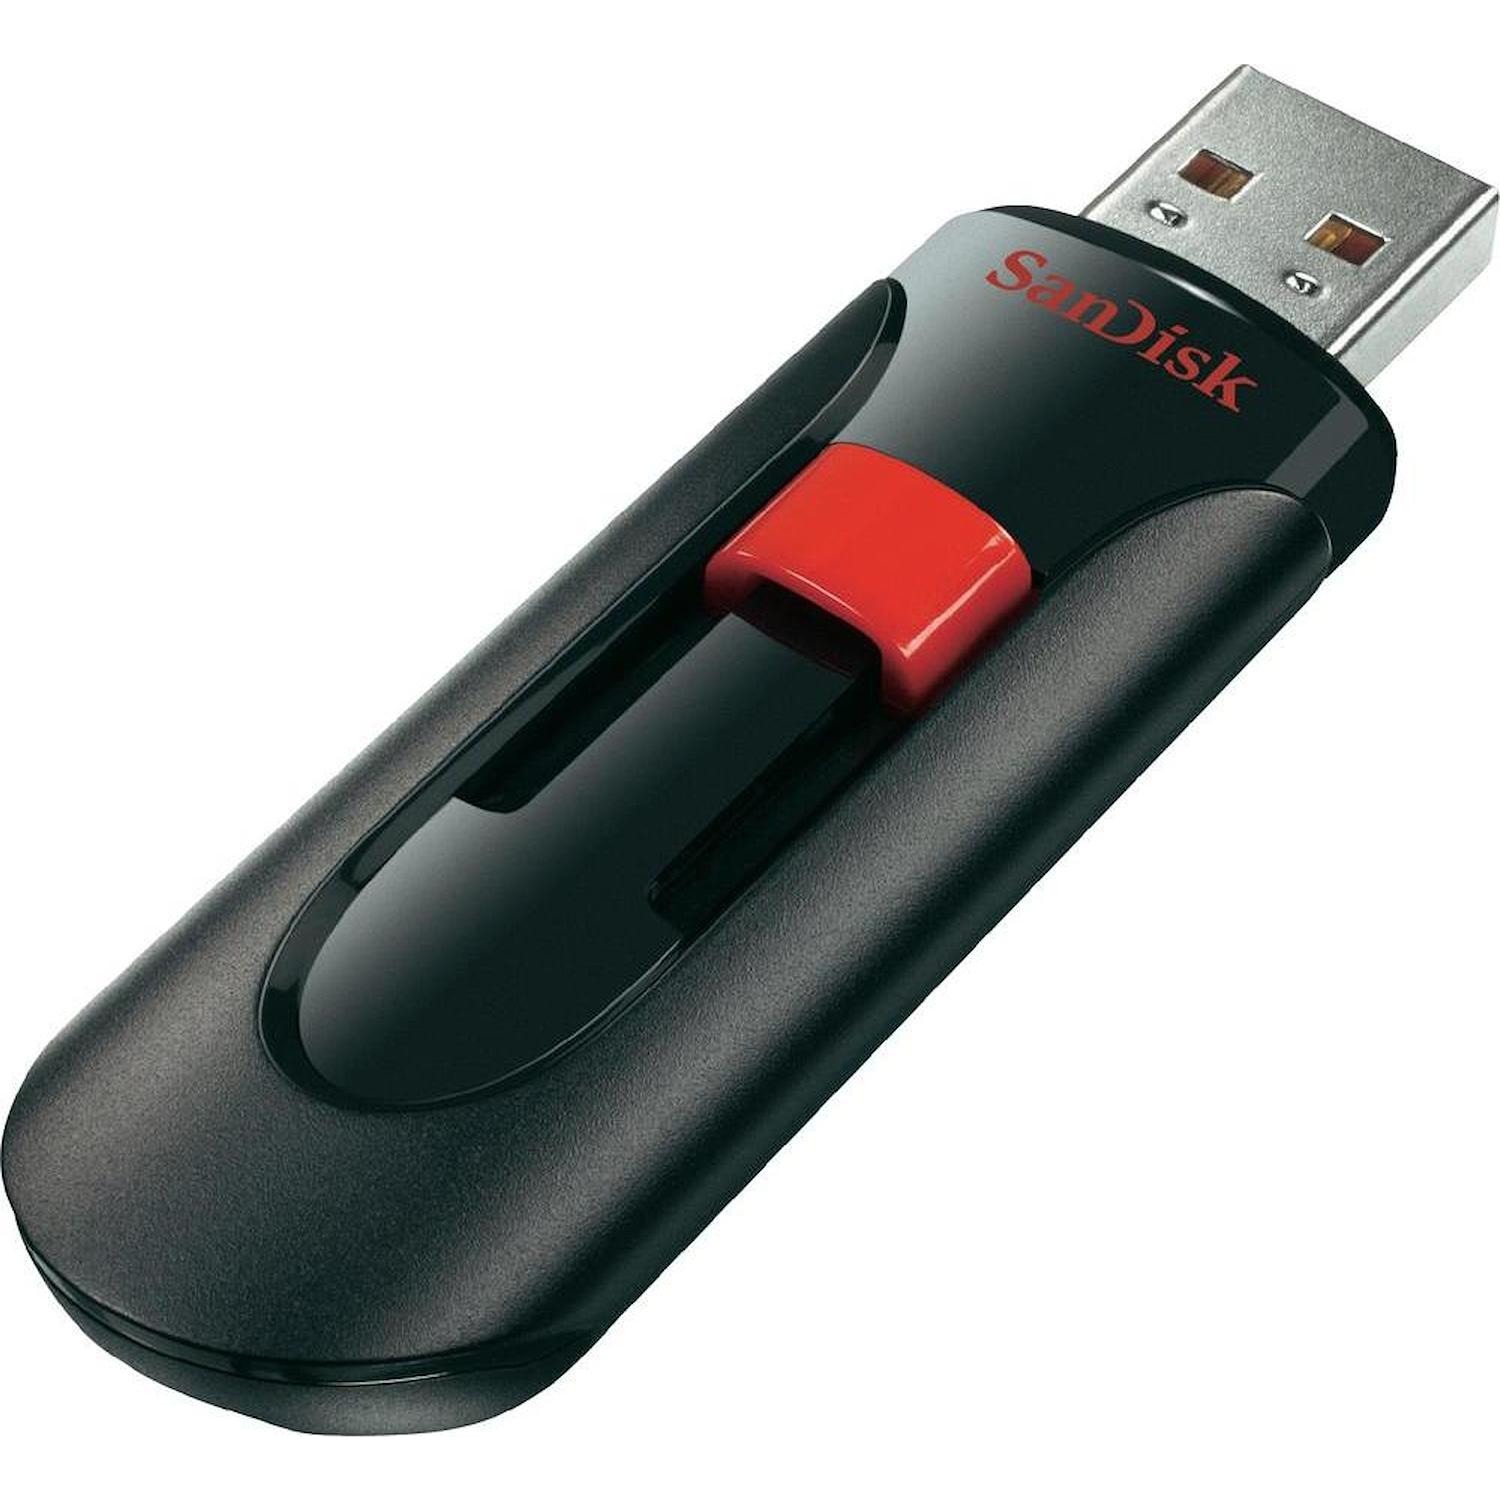 Immagine per Memoria USB San Disk Cruzer Glide 32 GB da DIMOStore